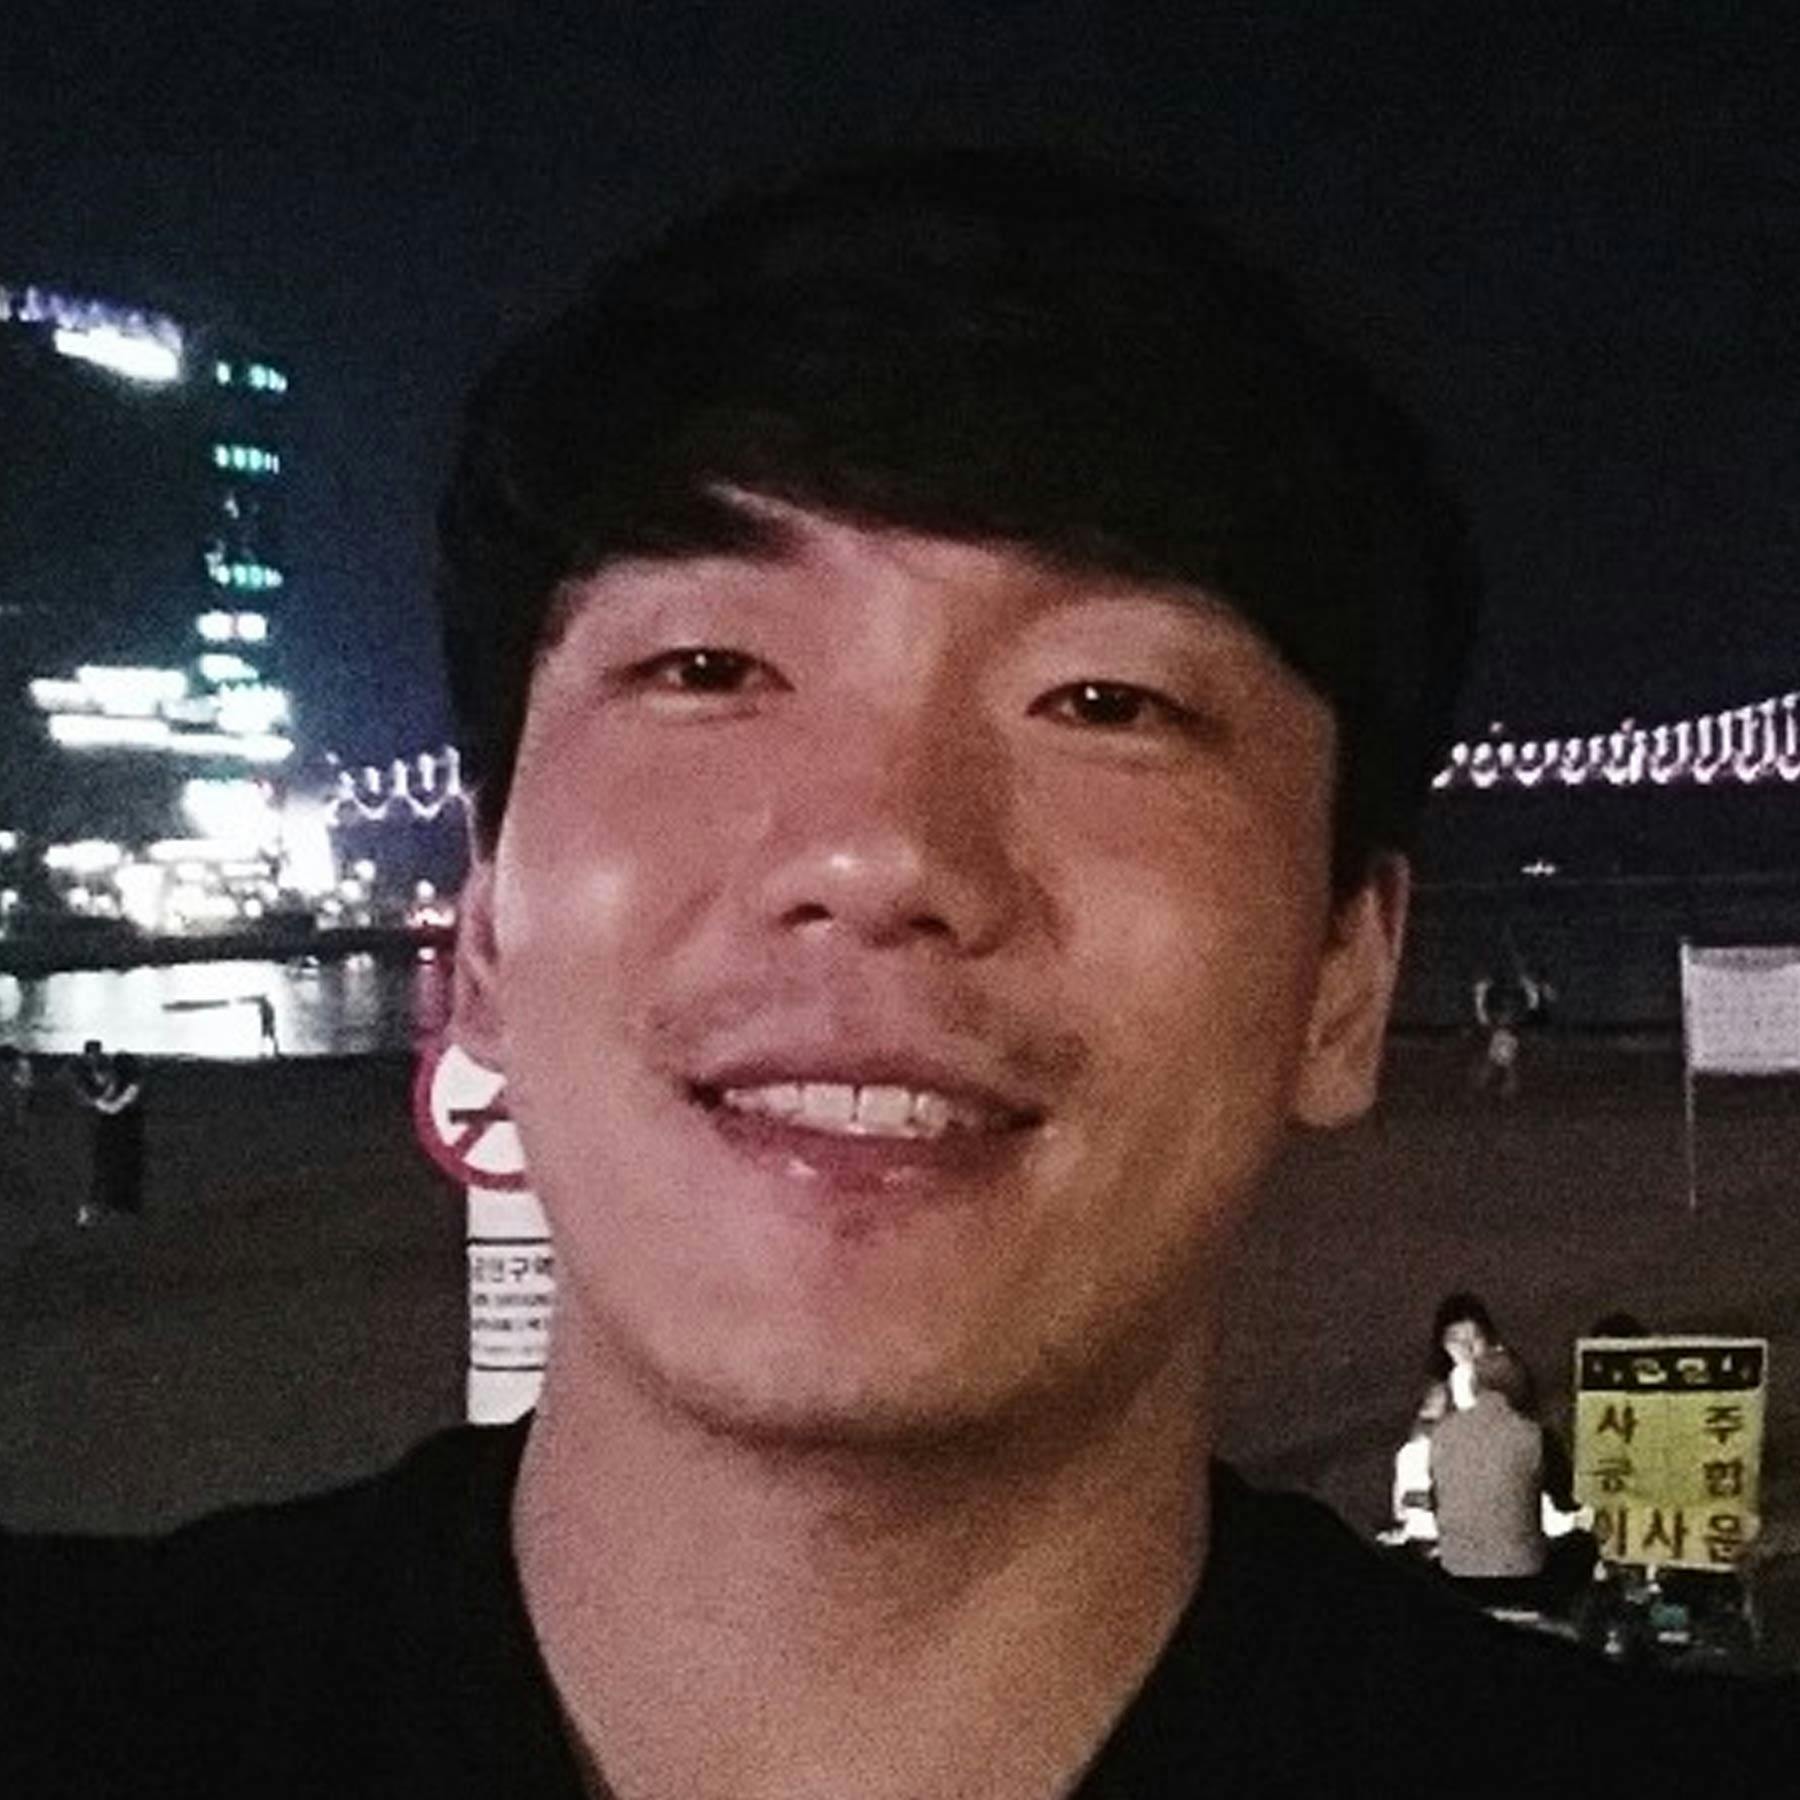 Member Lee Jeehyung